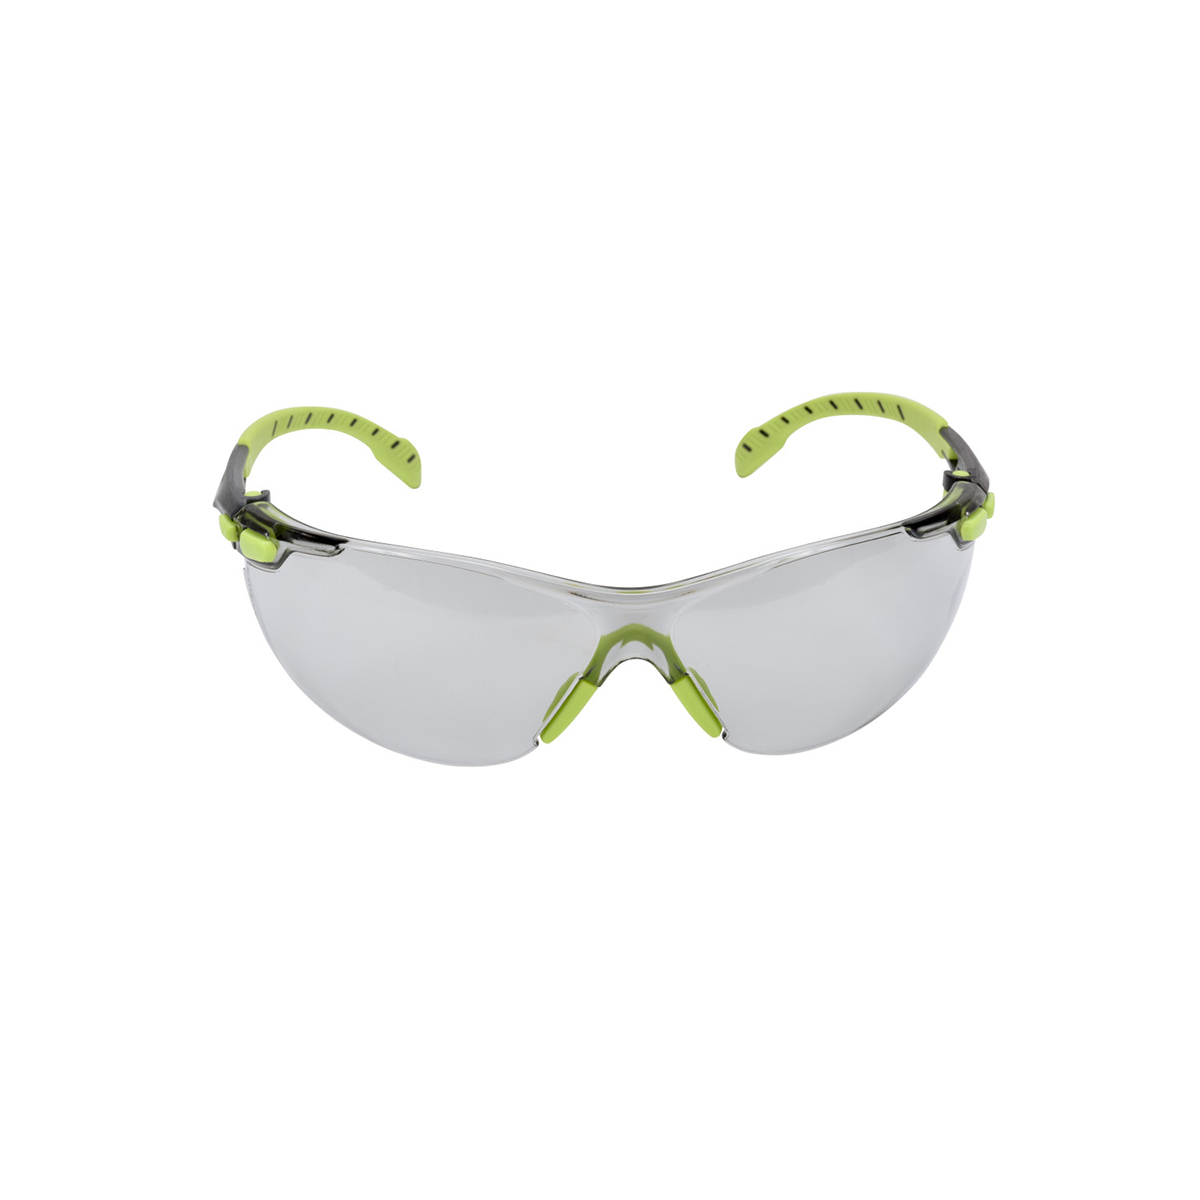 3M™ Solus™ Protective Eyewear 1000 Series S1207SGAF Green/Black, Scotchgard™ Anti-Fog Lens (Availability restrictions apply.)